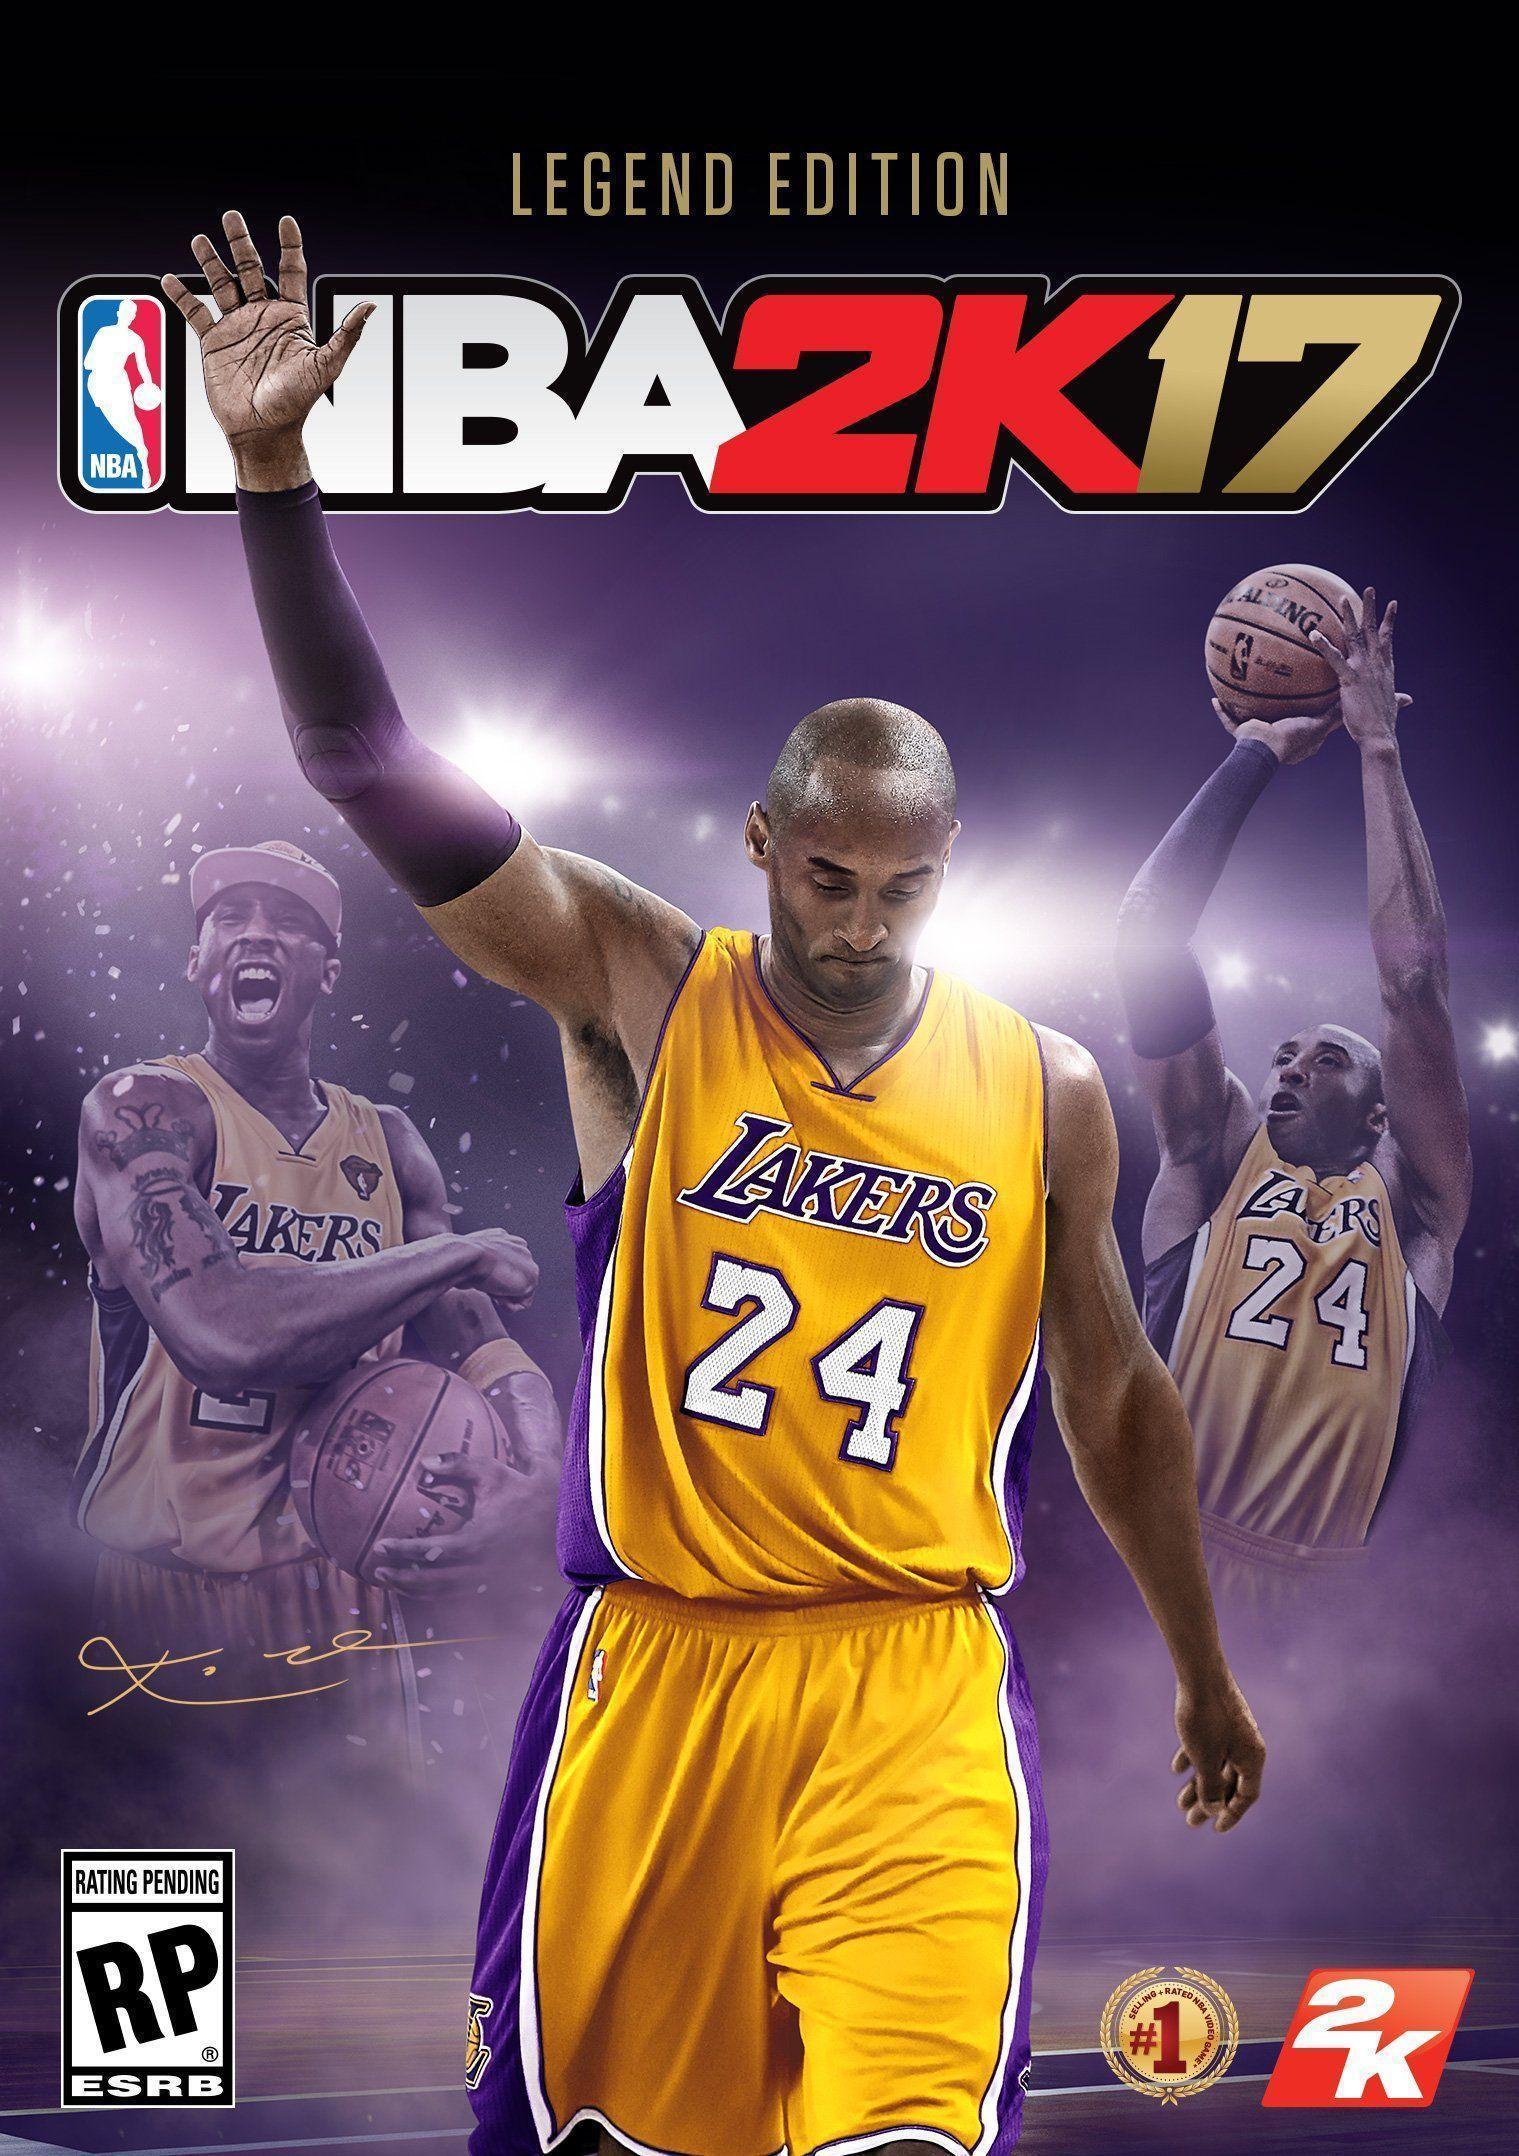 Kobe Bryant Gets NBA 2K17 Legend Edition Cover. Kobe Bryant